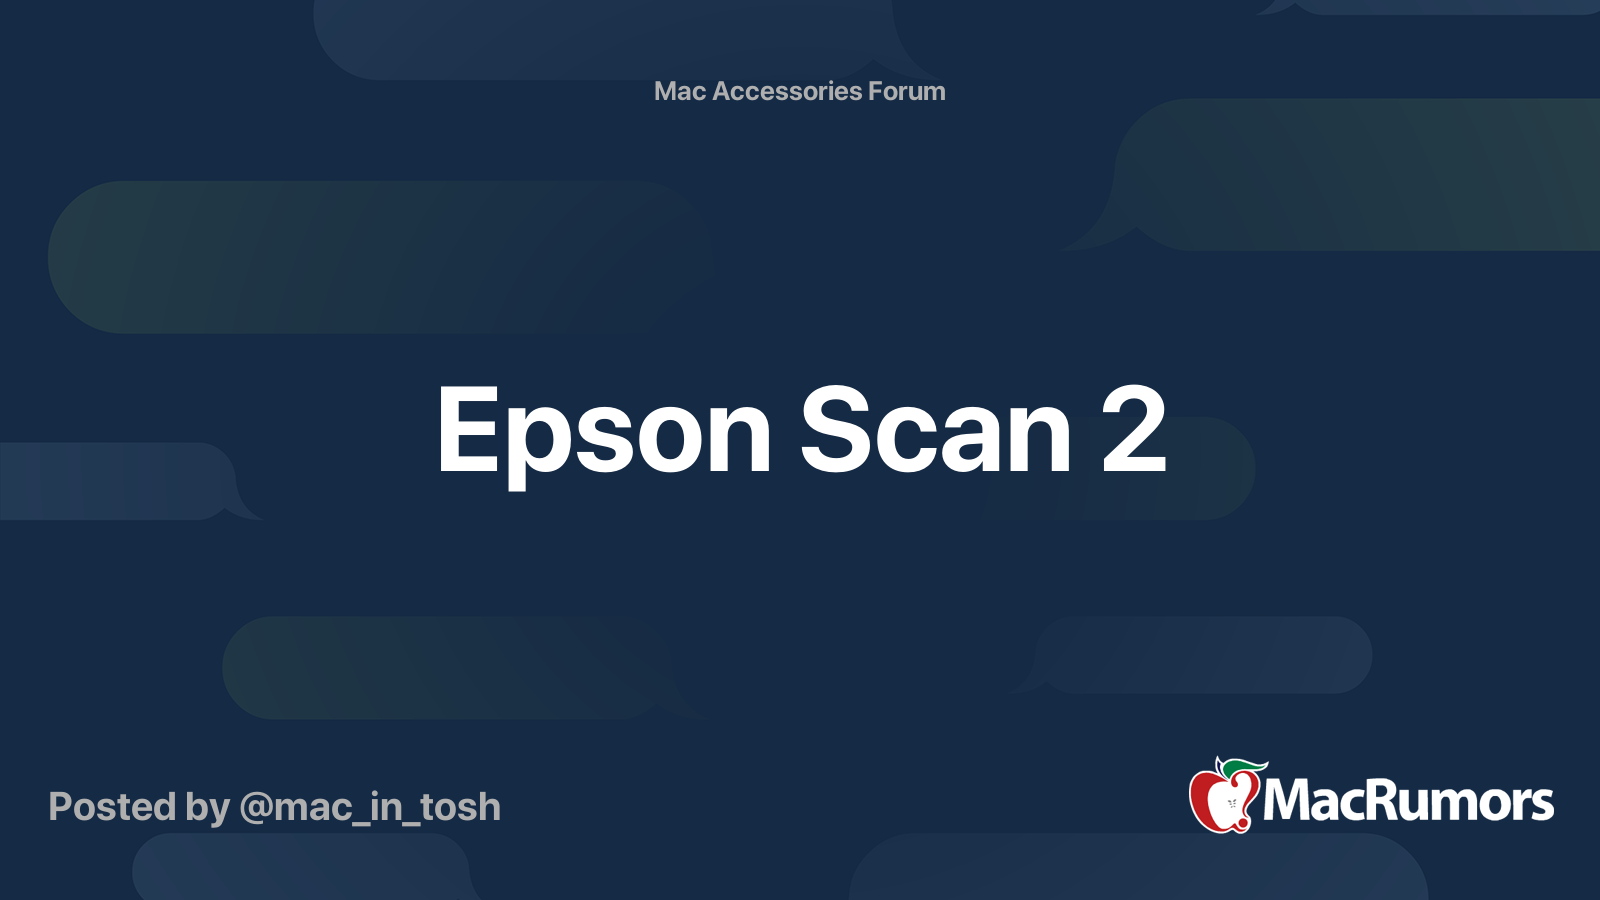 Merchandiser Registration Are depressed Epson Scan 2 | MacRumors Forums